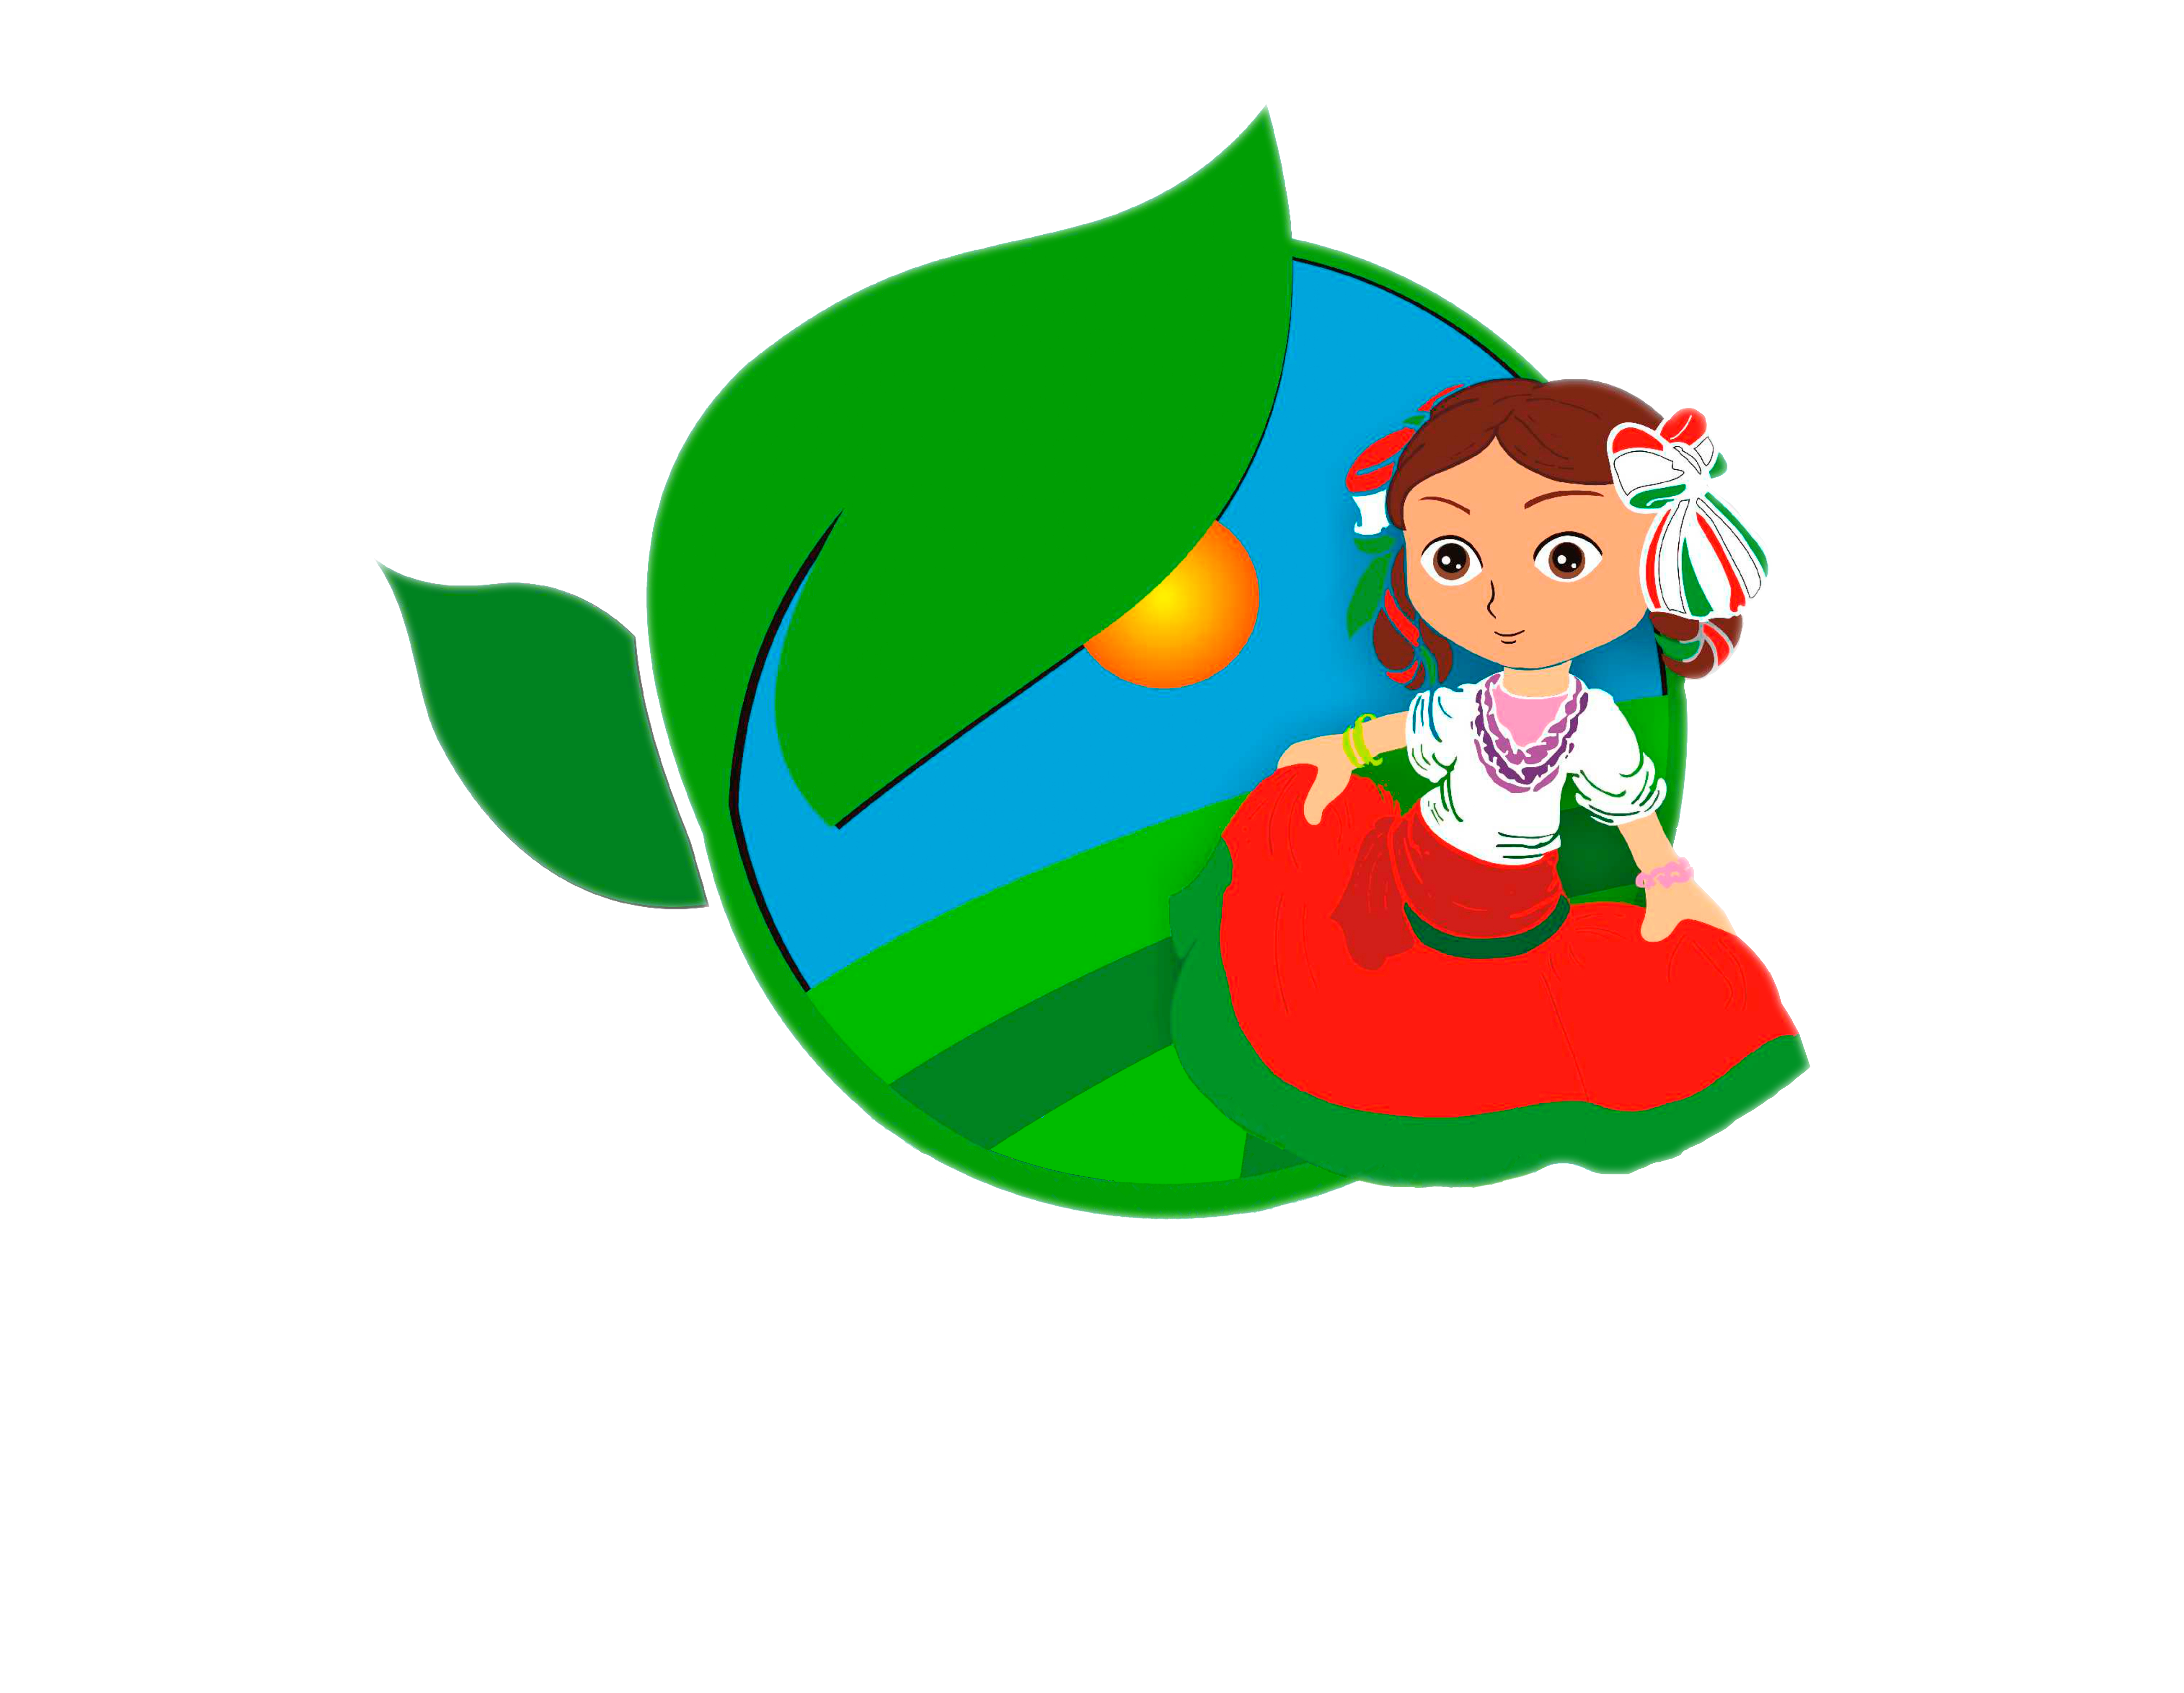 Chulafarm